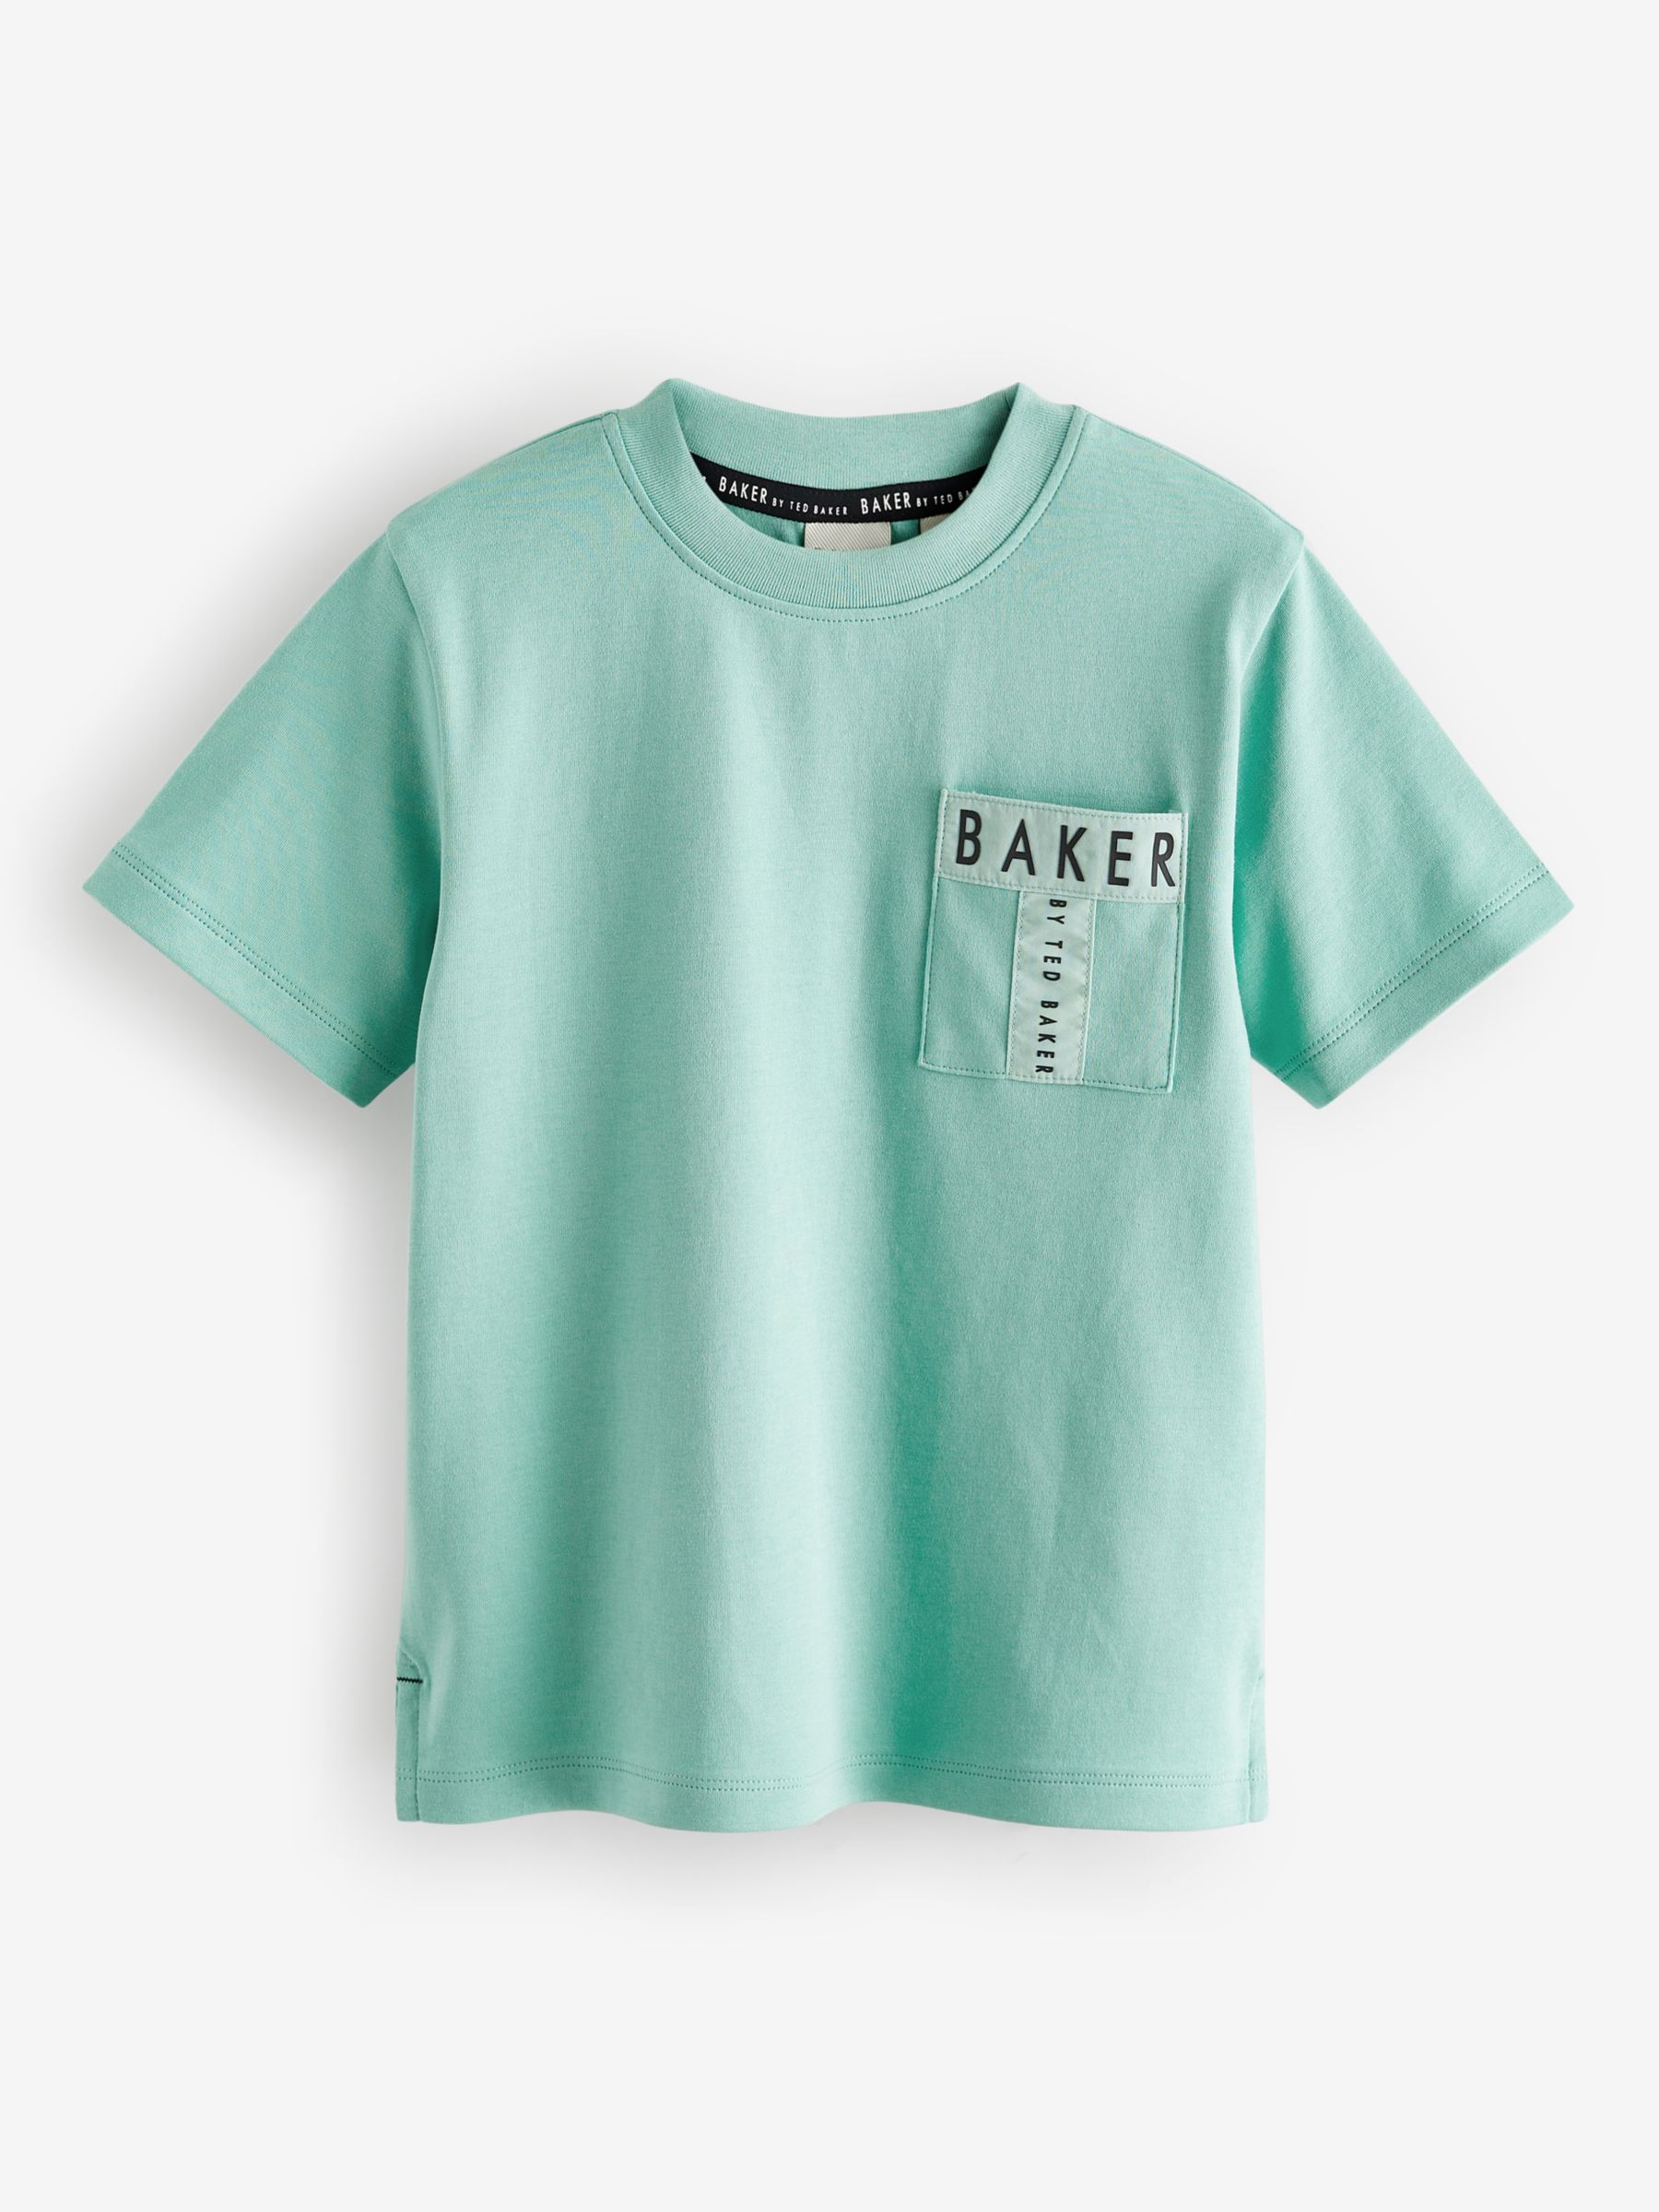 Ted Baker Kids' Logo Pocket T-Shirt, Green, 8 years